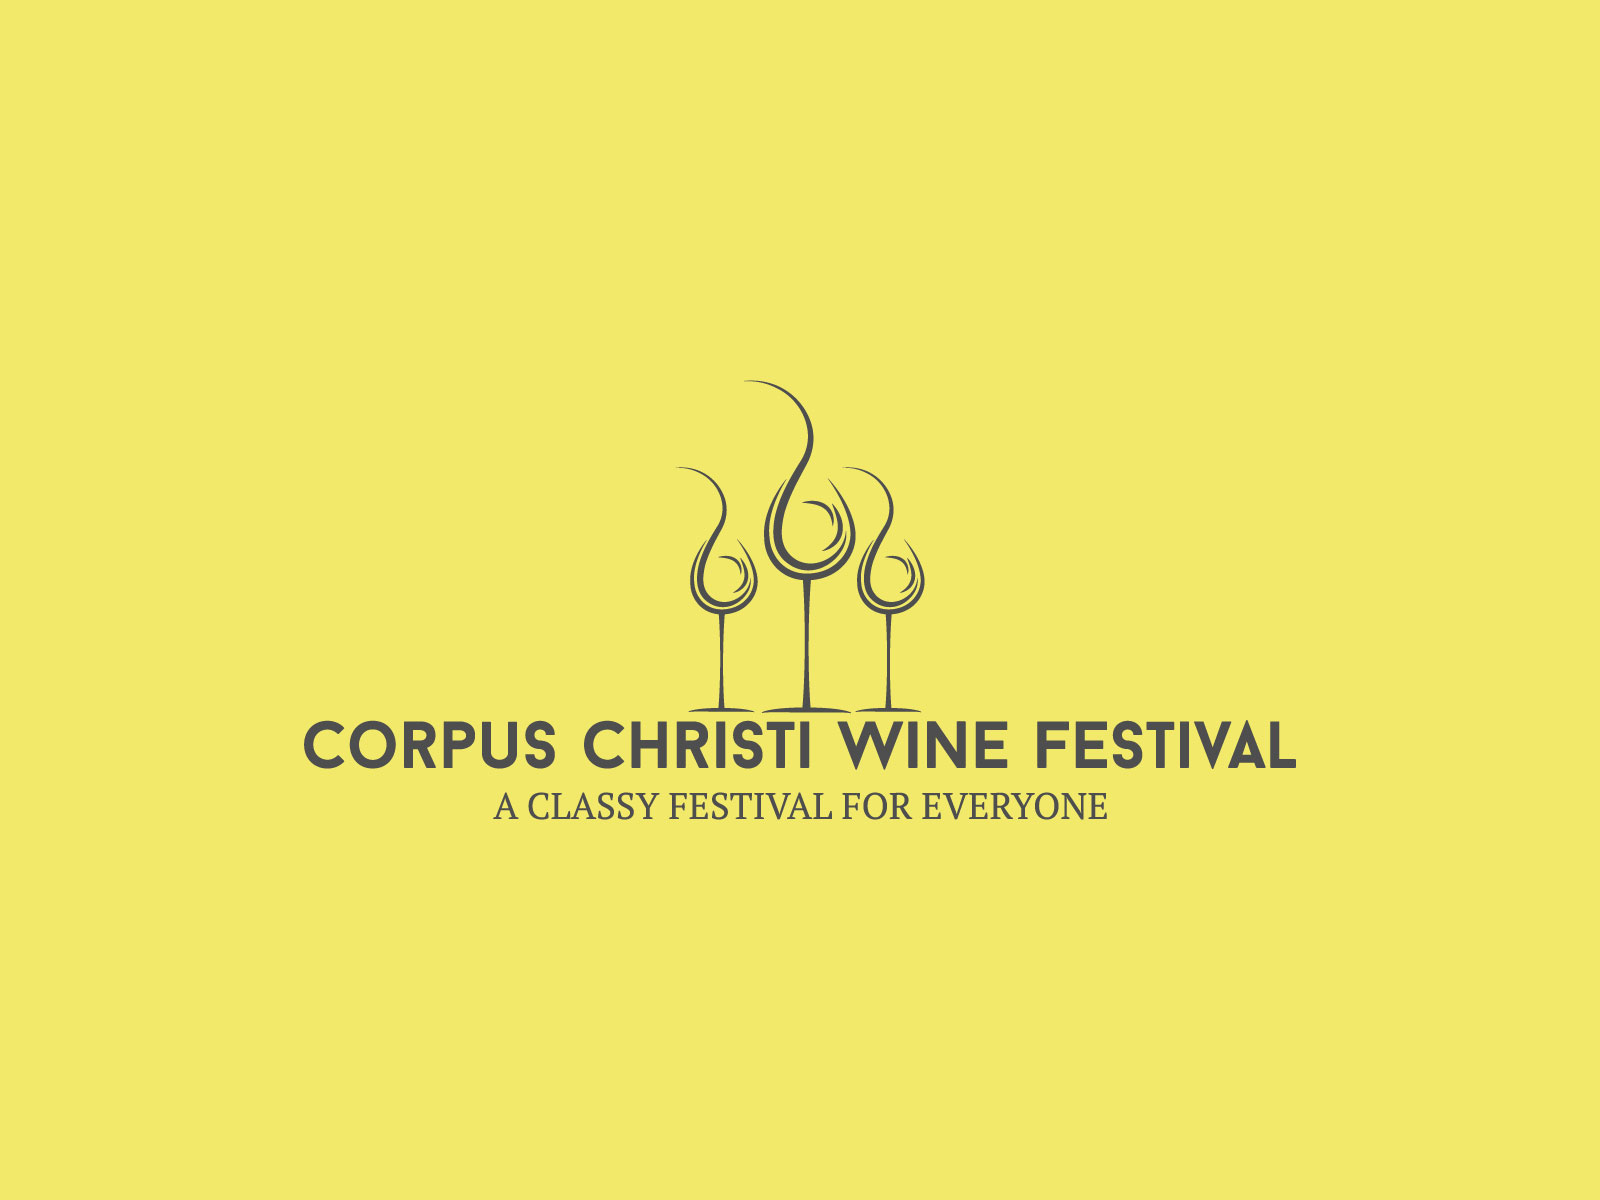 Corpus christi wine festival by sufian asif on Dribbble